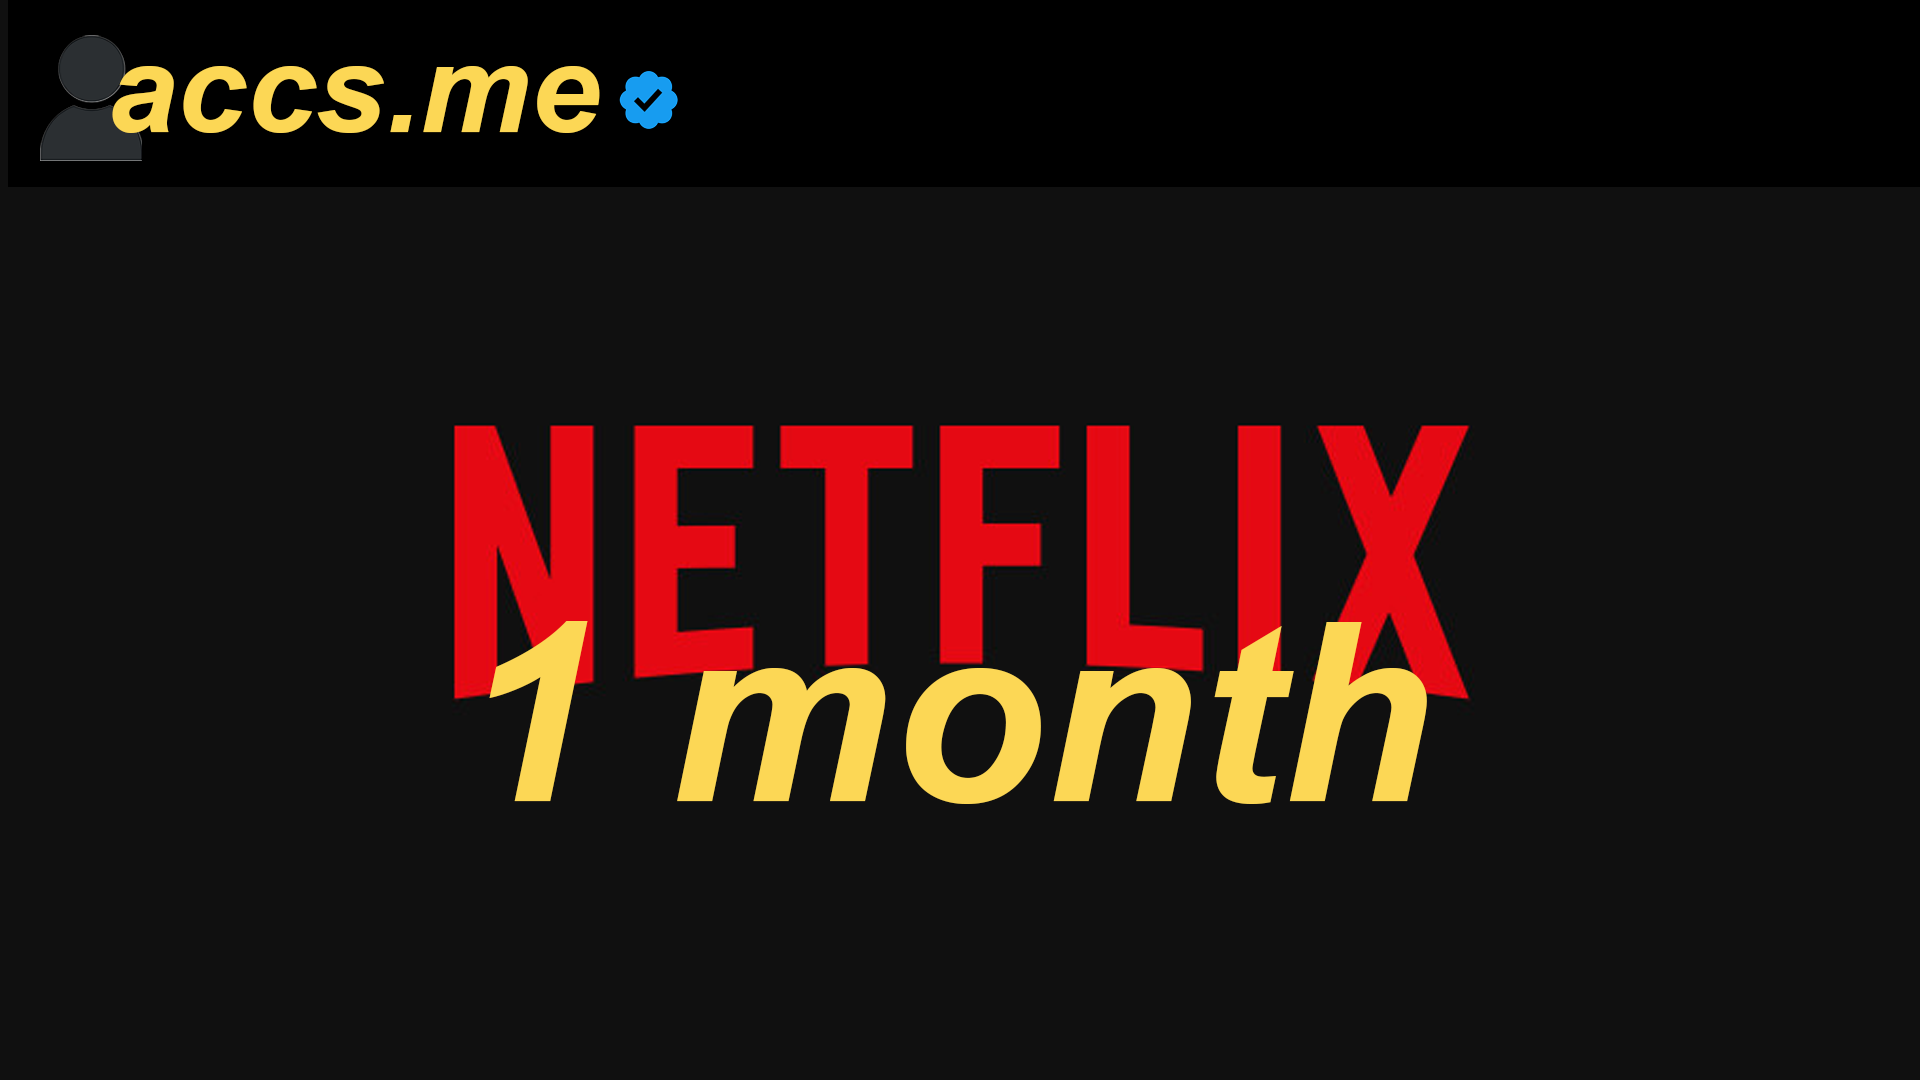 Netflix Account [1 Month]